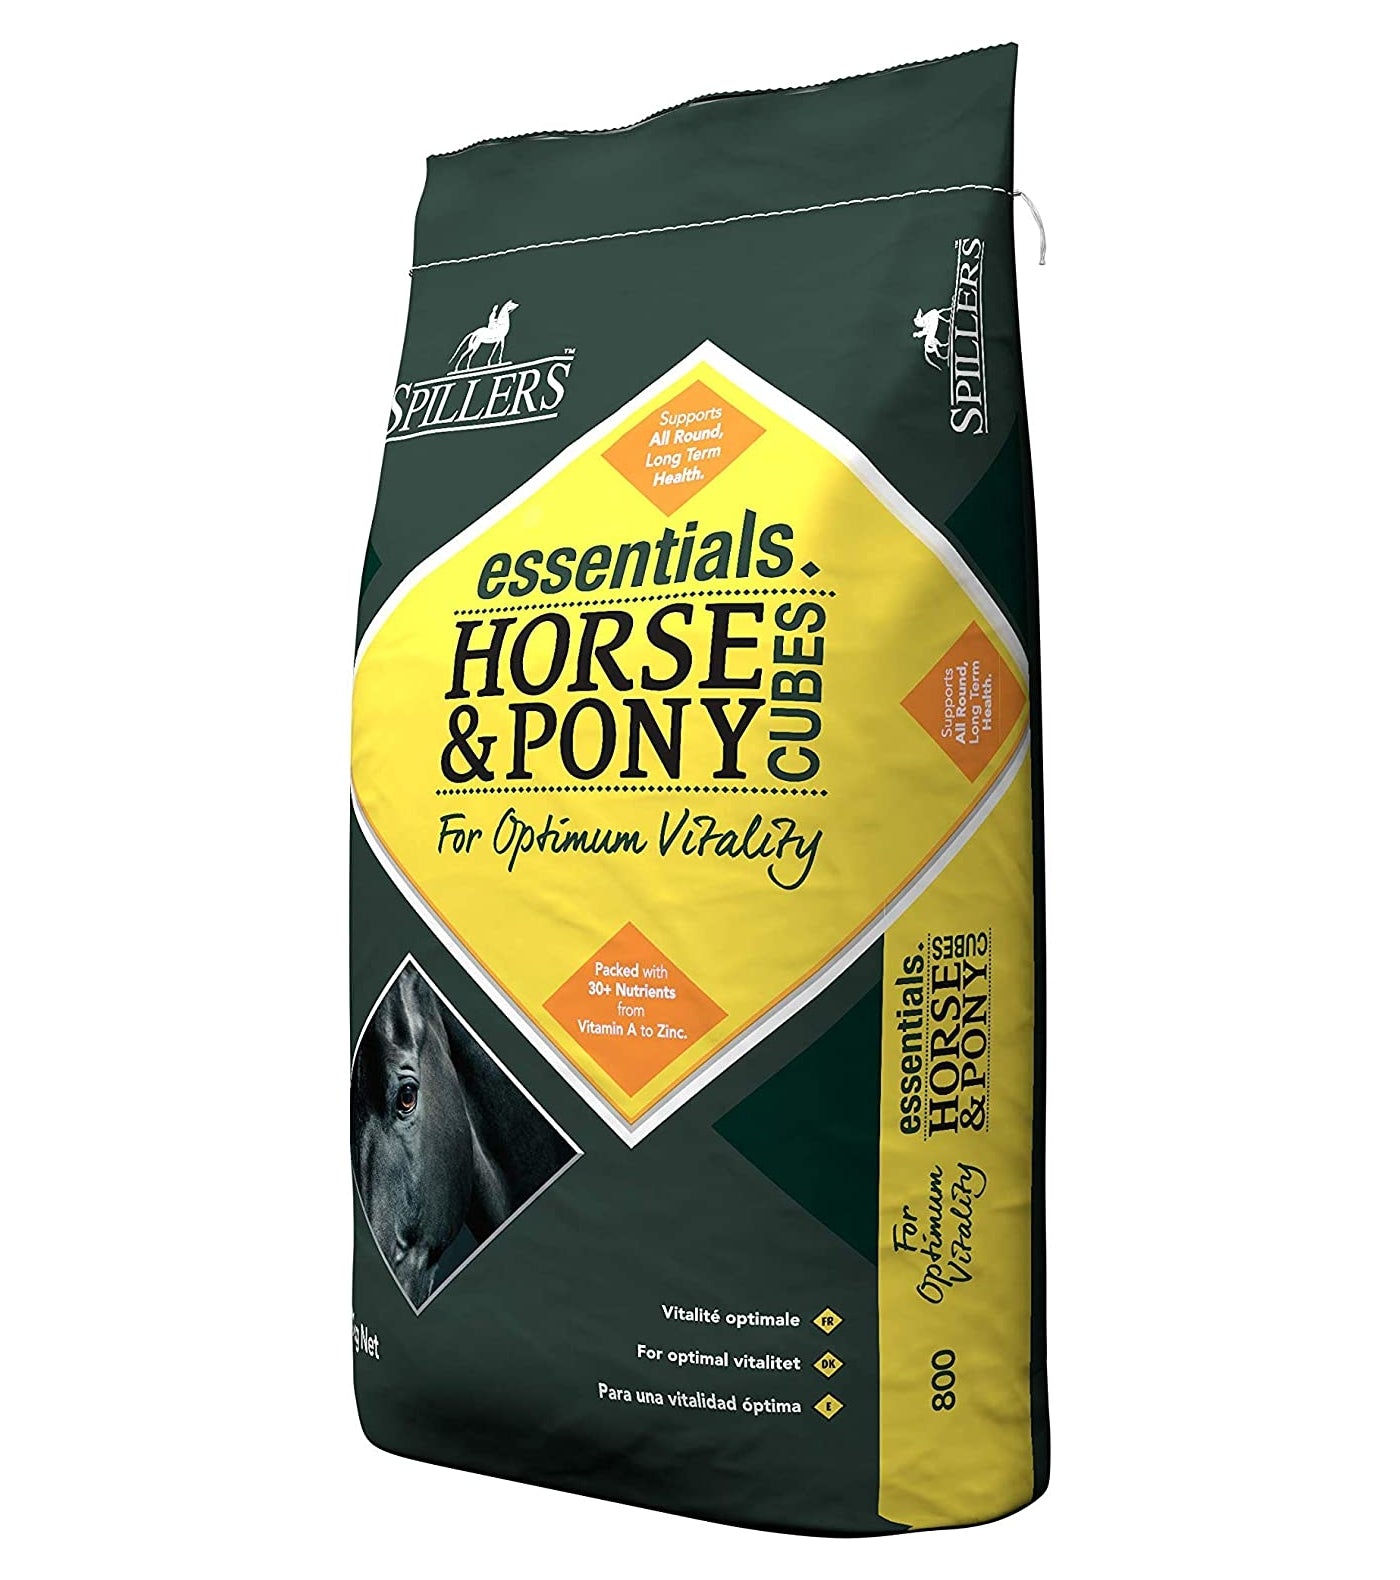 Spillers - Horse & Pony Cubes 20kg | Horse Feed - Buy Online SPR Centre UK